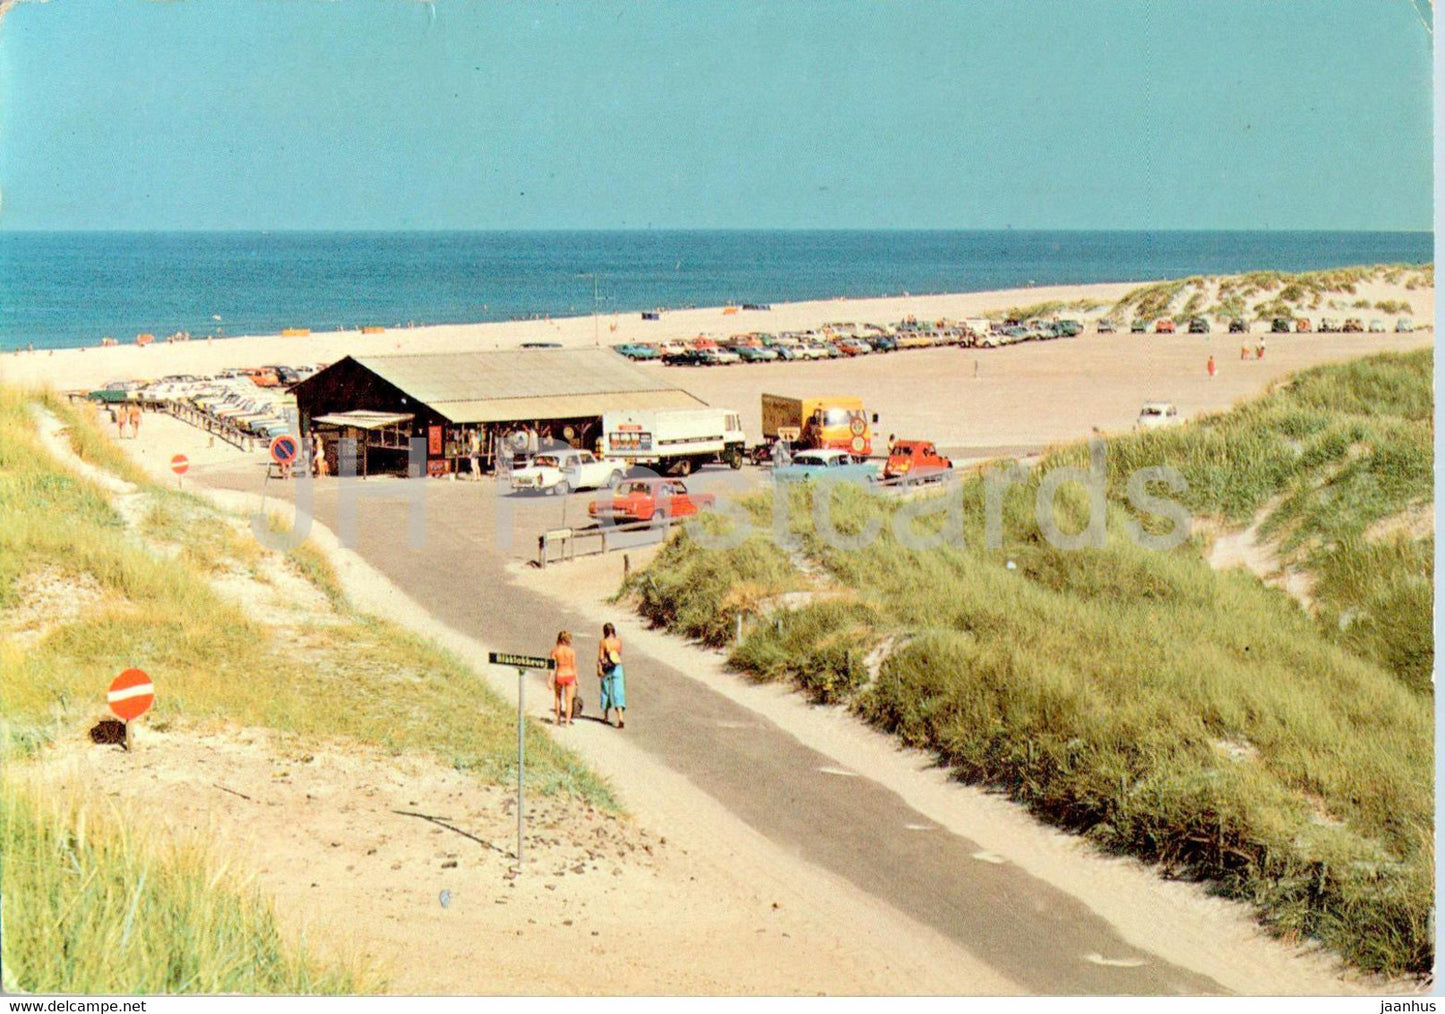 Henne strand - beach - 677 - Denmark - used - JH Postcards